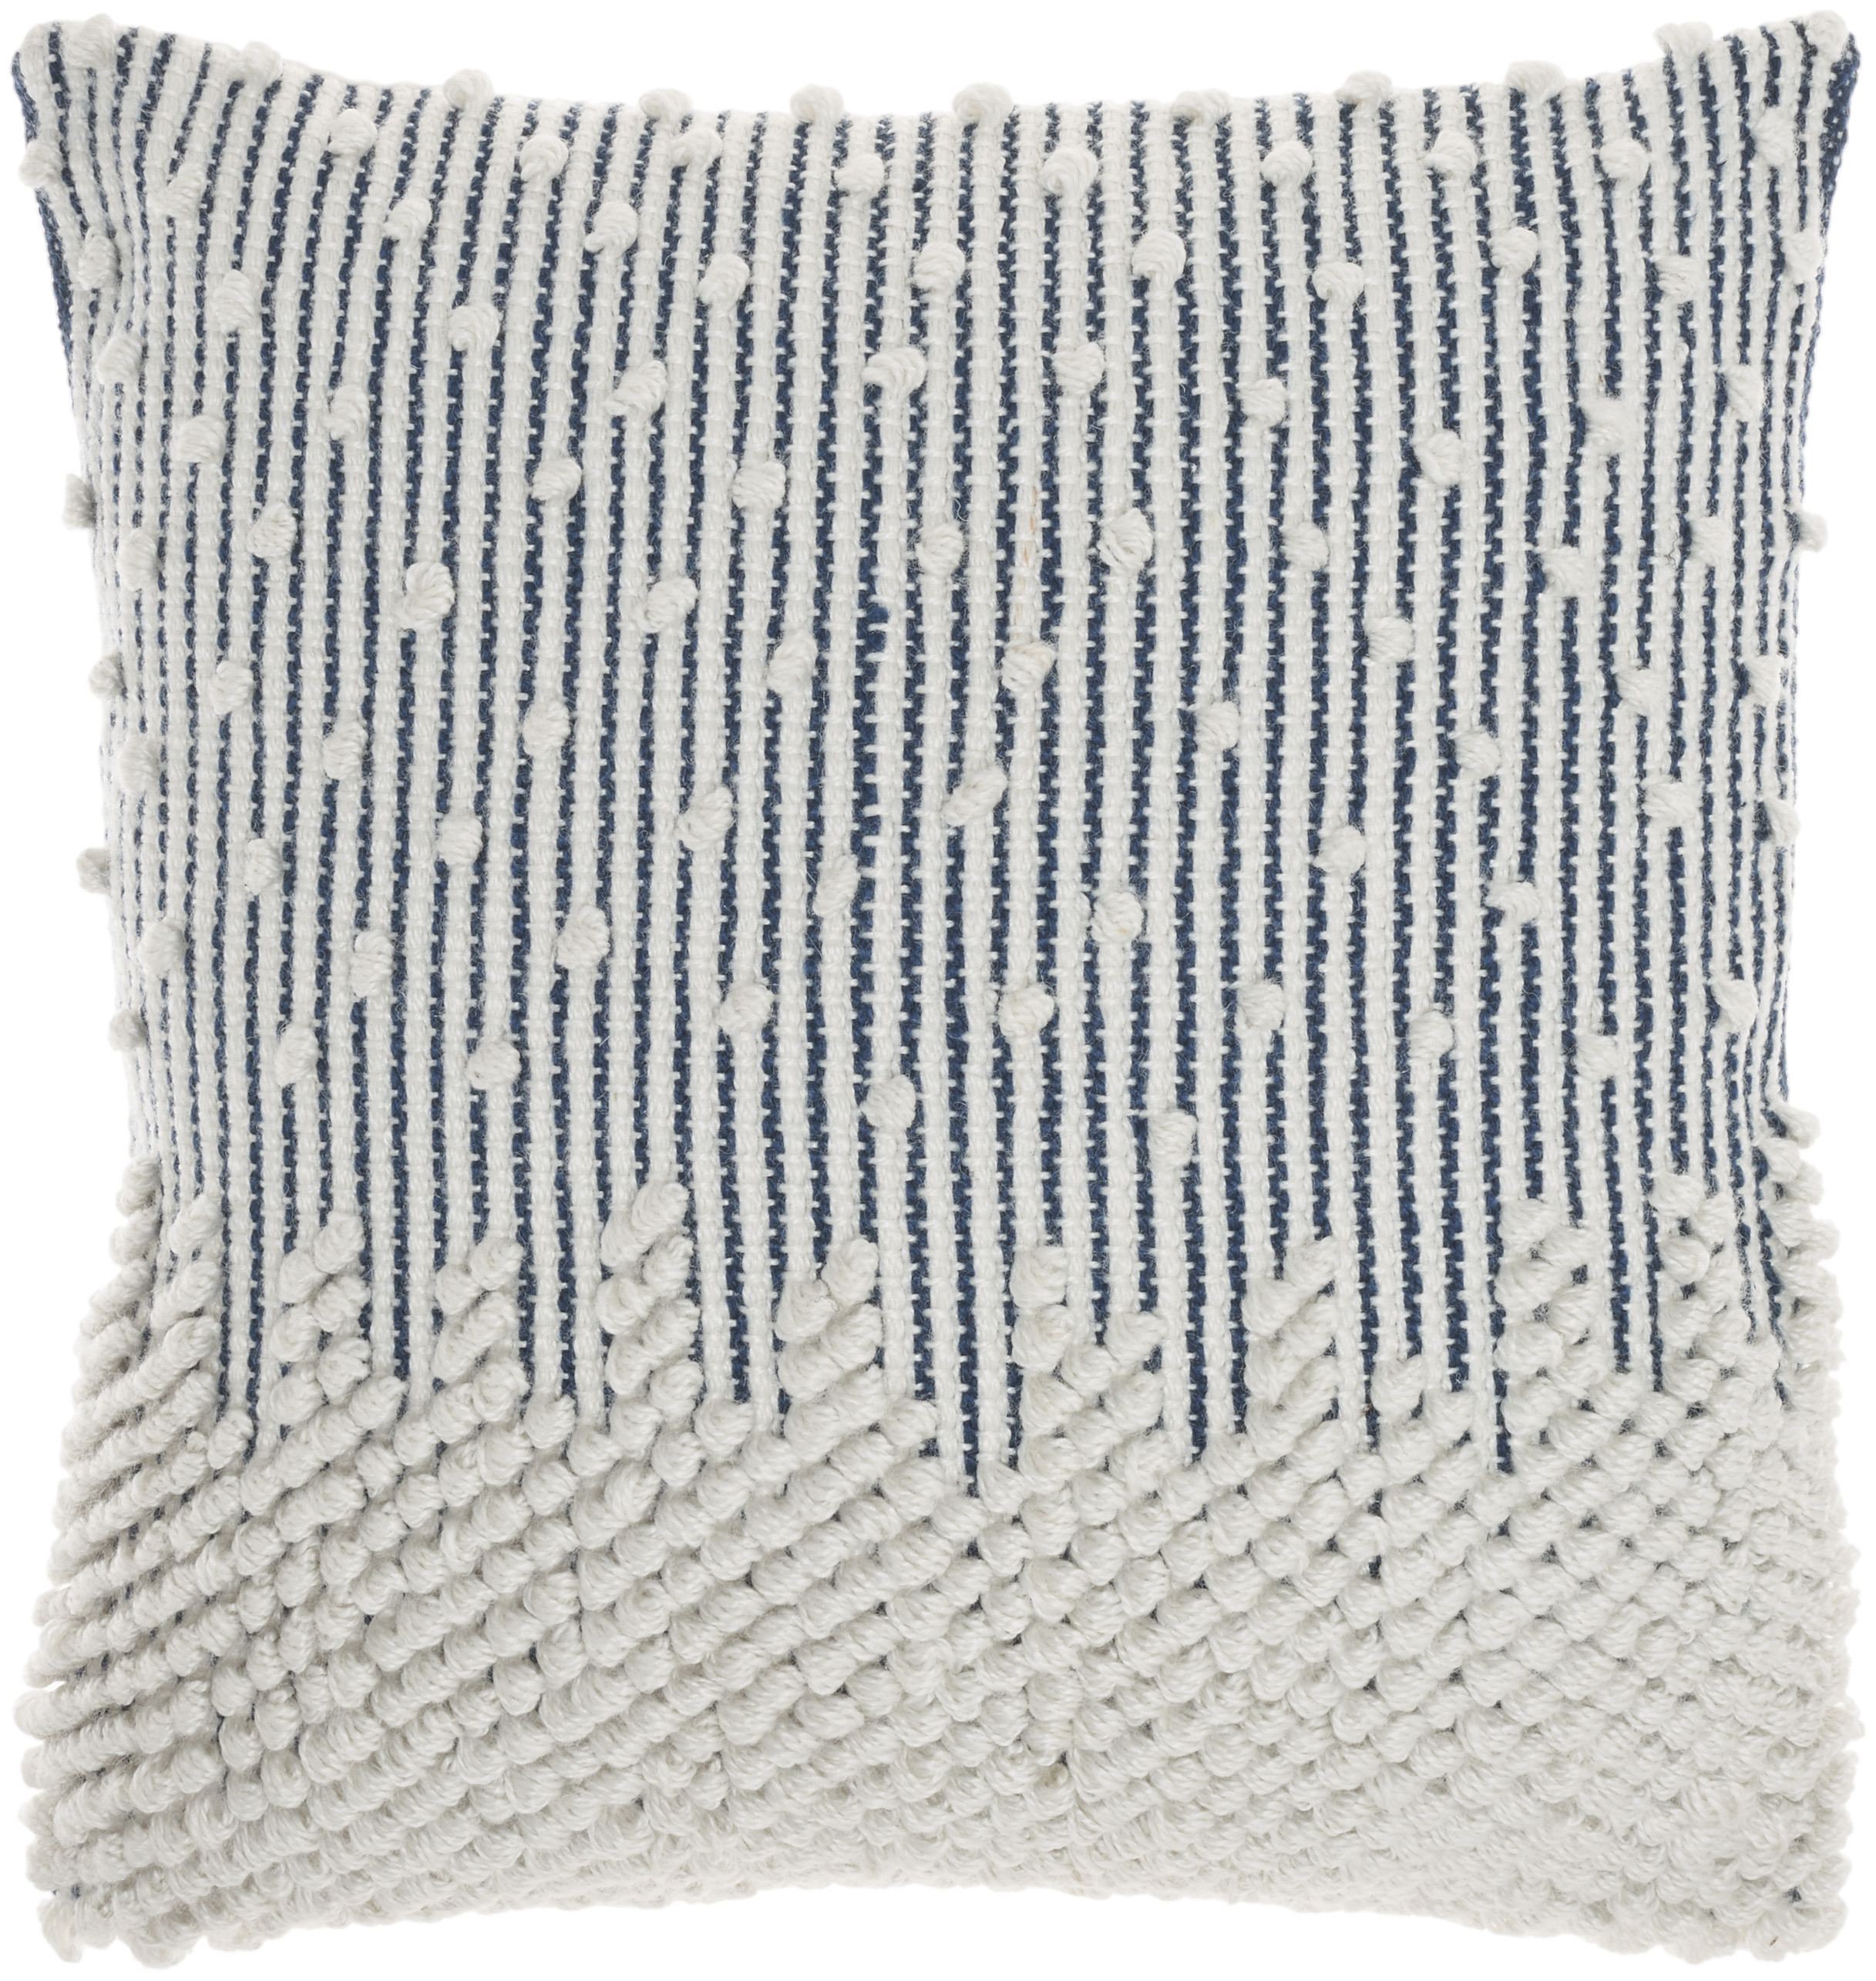 Nourison Outdoor Pillows Gradual Dots Navy 18" x 18" Throw Pillow - image 1 of 6